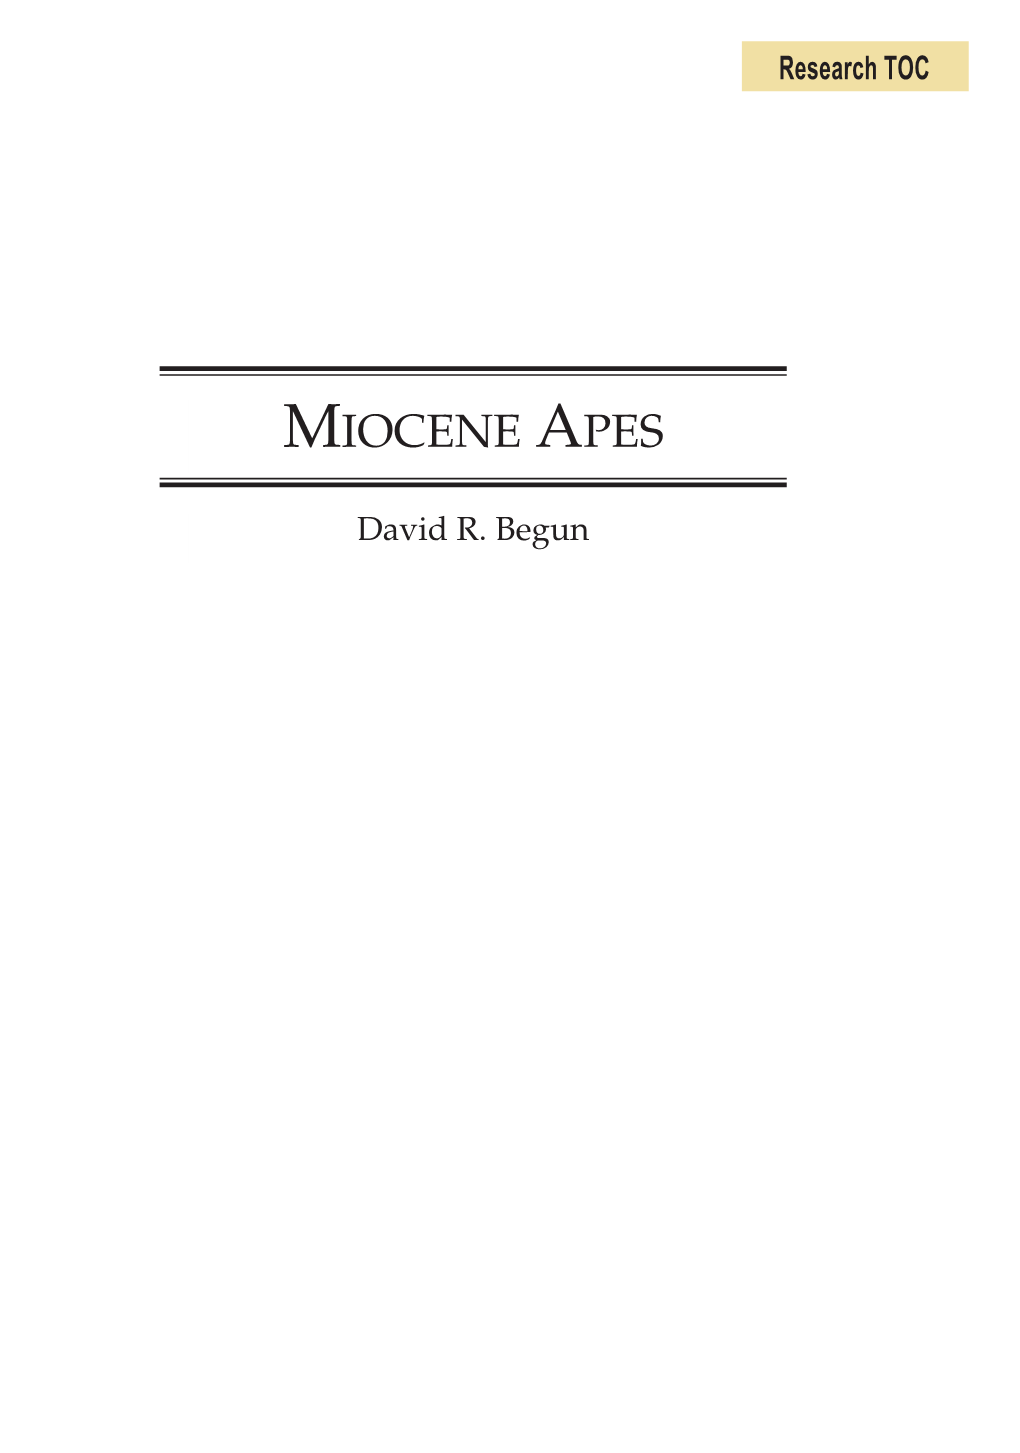 Miocene Apes